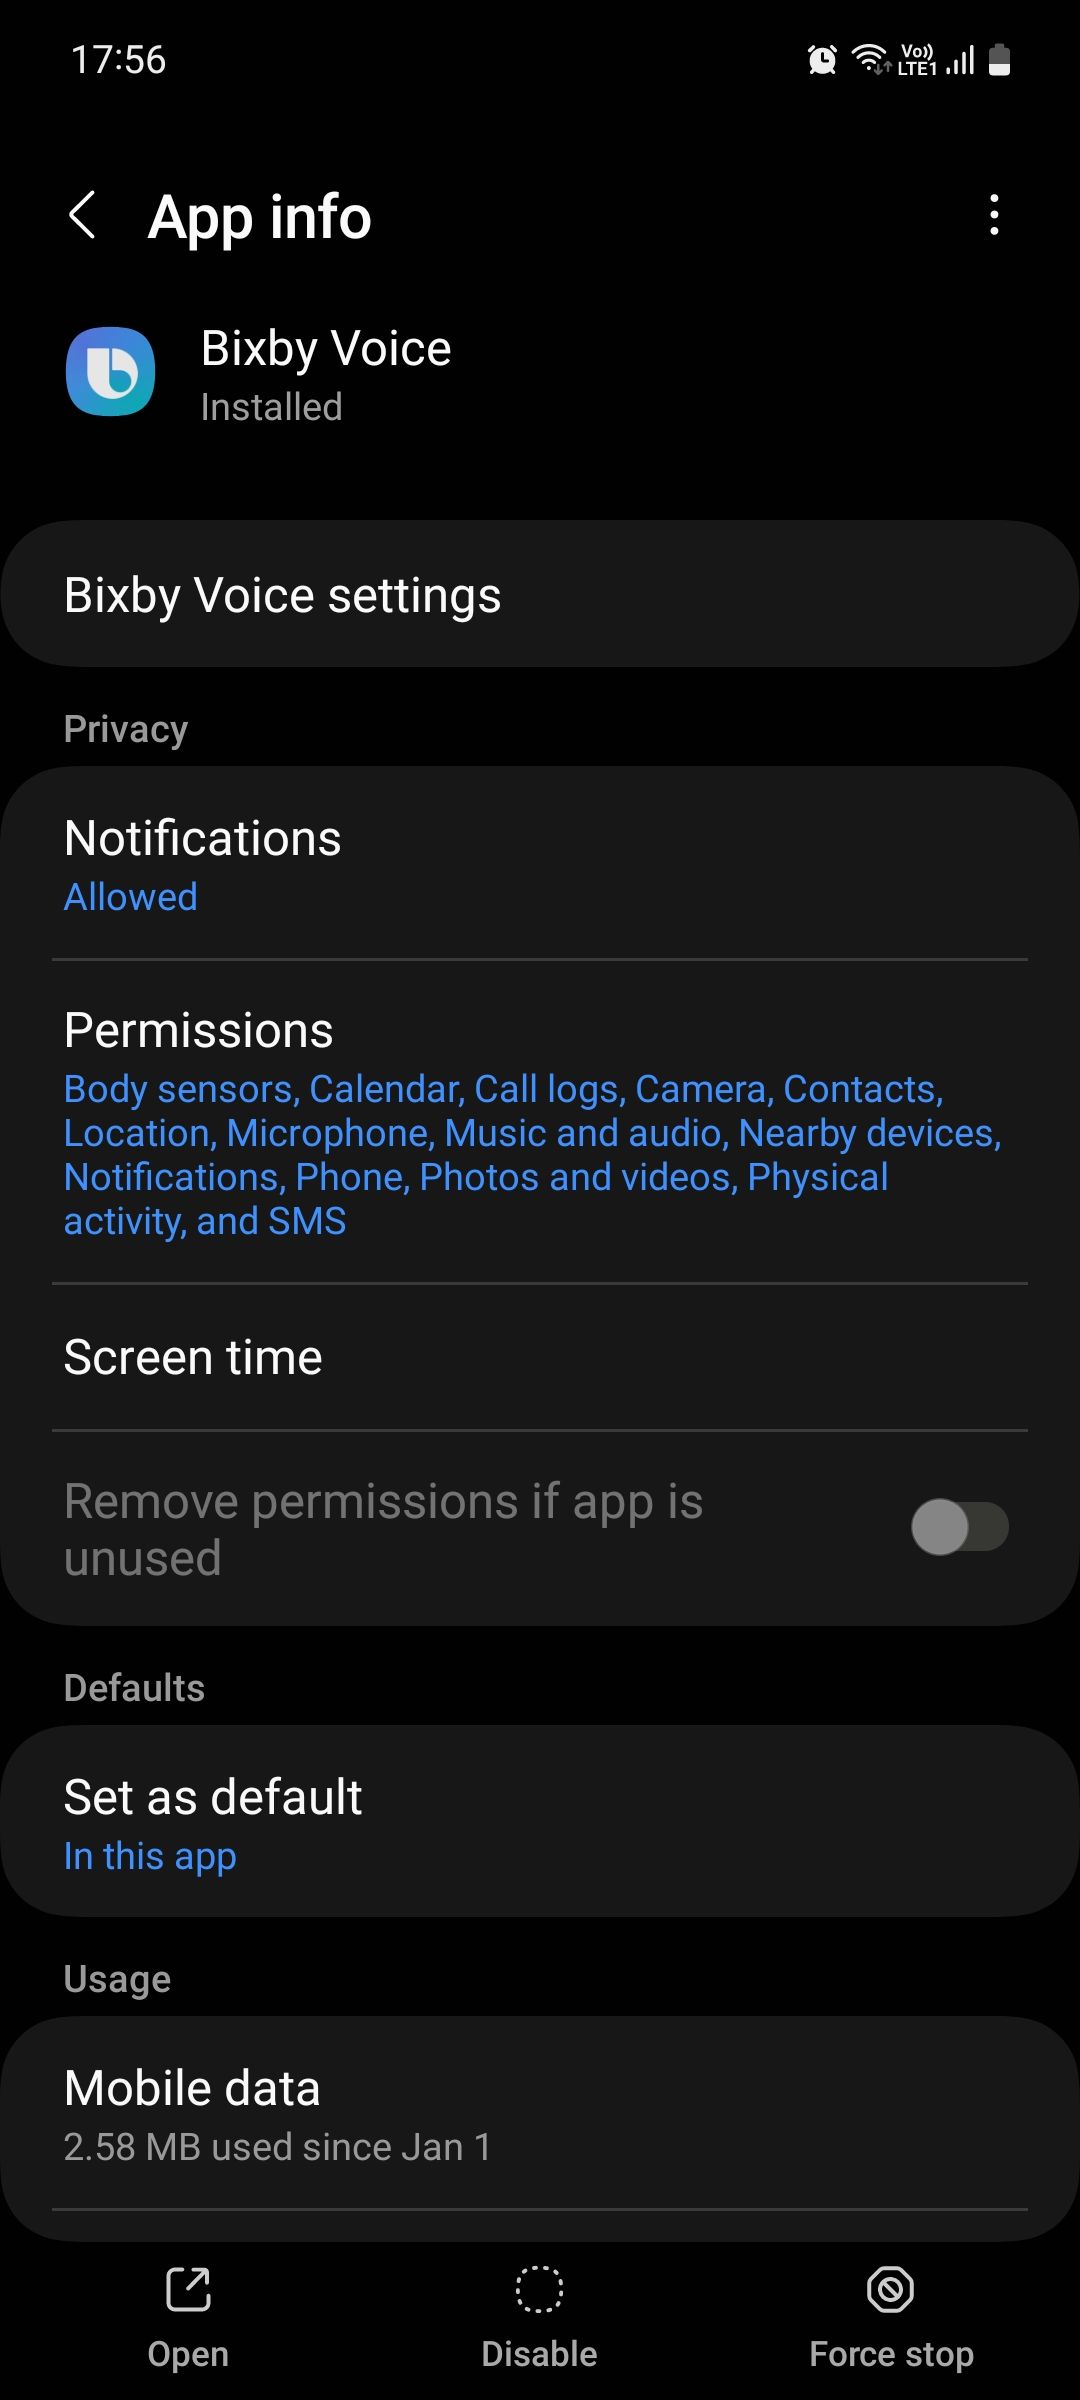 Bixby App info menu on One UI